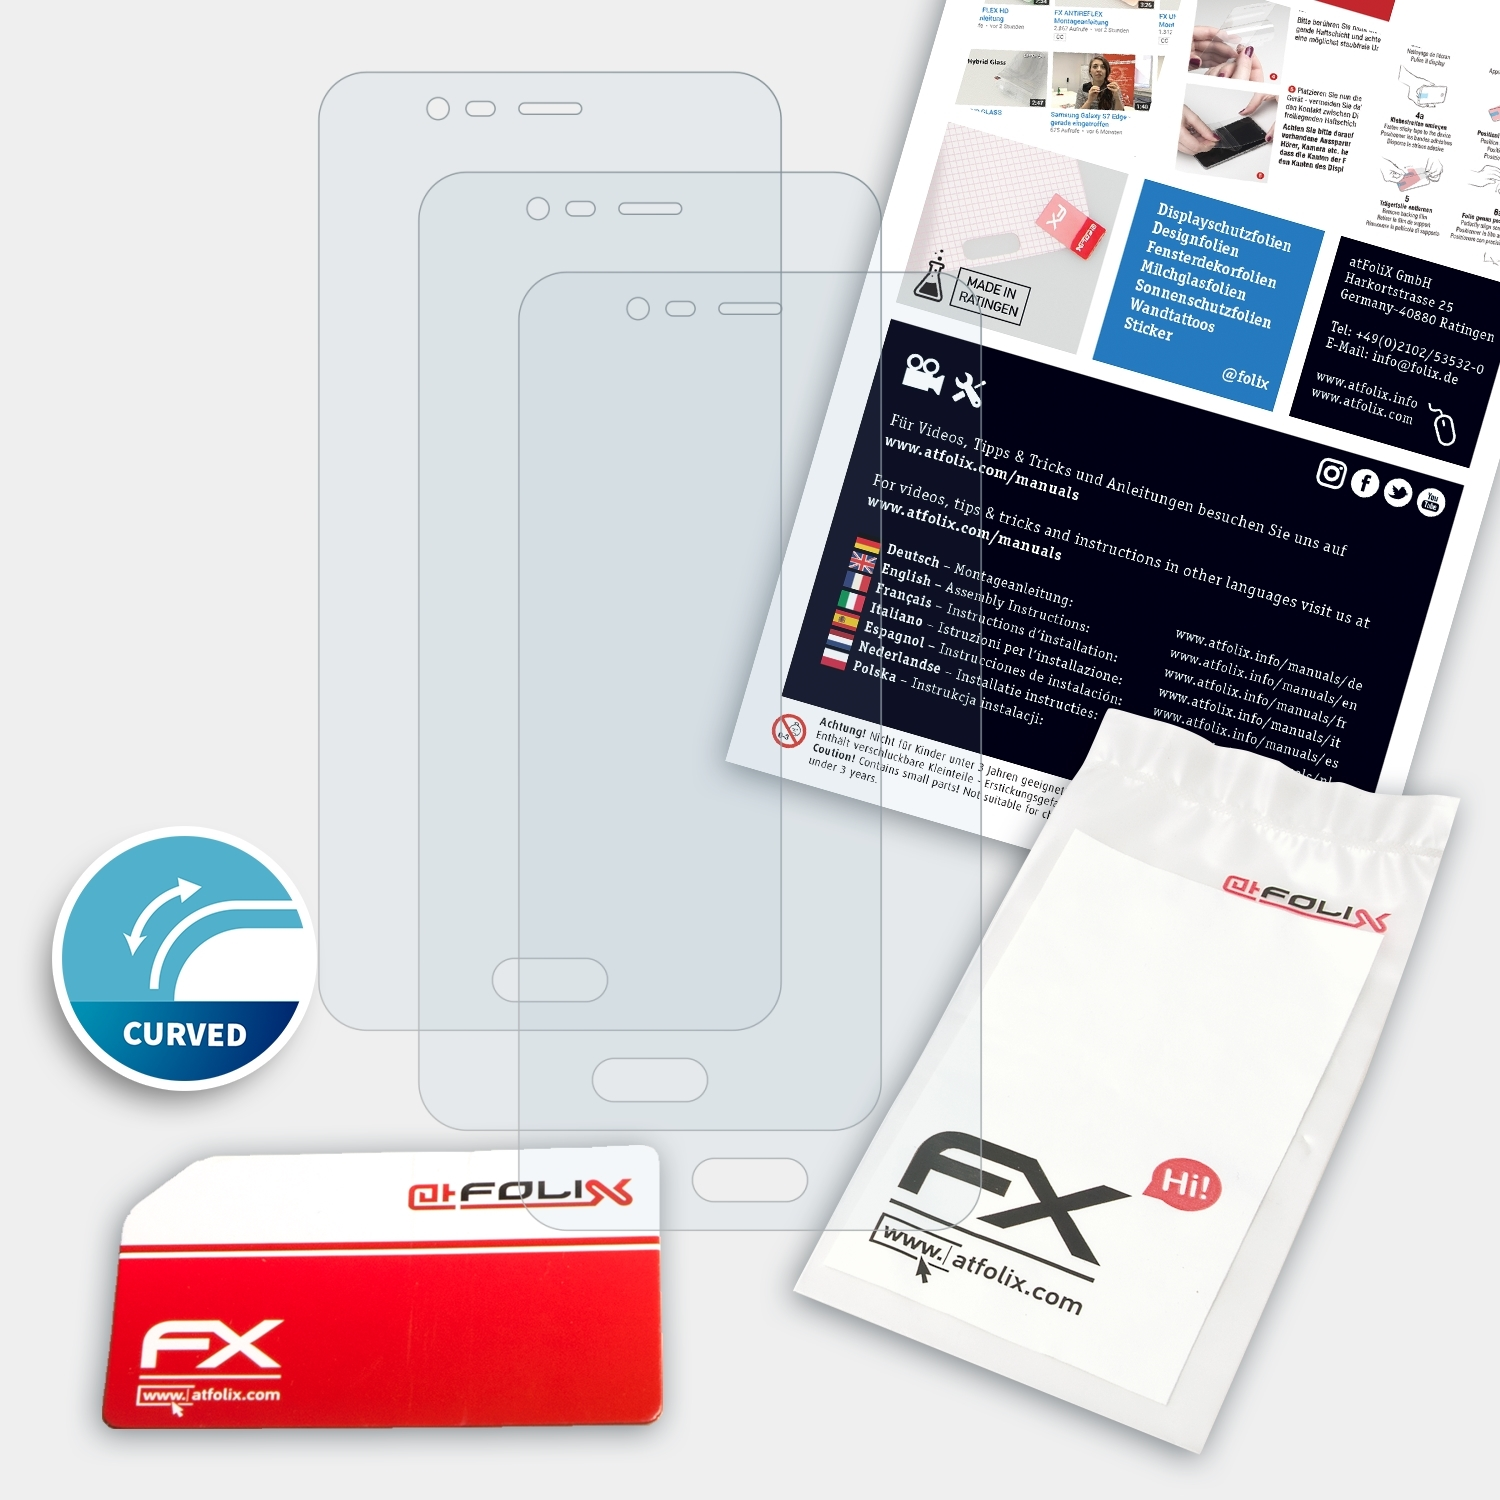 3x P6000) ATFOLIX FX-ActiFleX Blackview Displayschutz(für